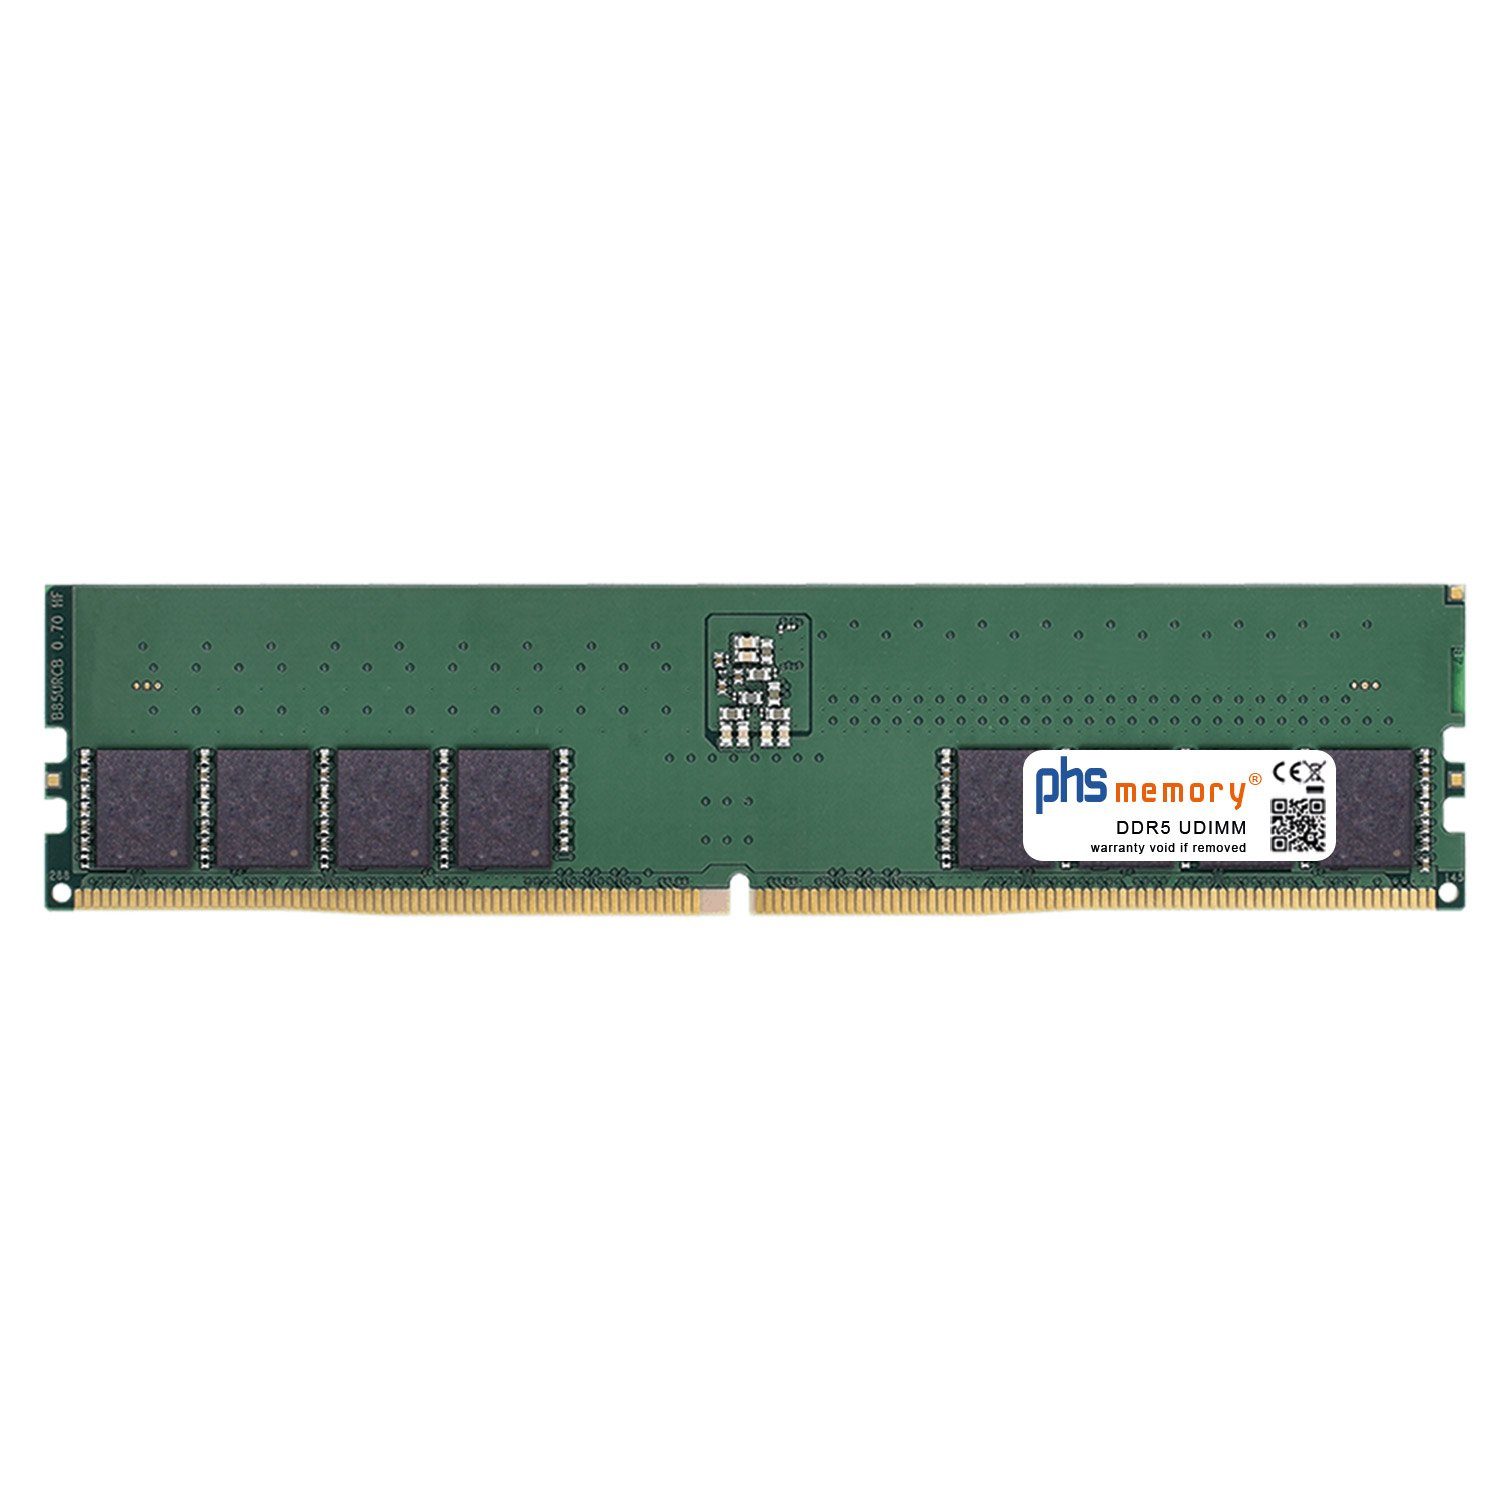 PHS-memory RAM für Captiva Ultimate Gaming I70-953 Arbeitsspeicher